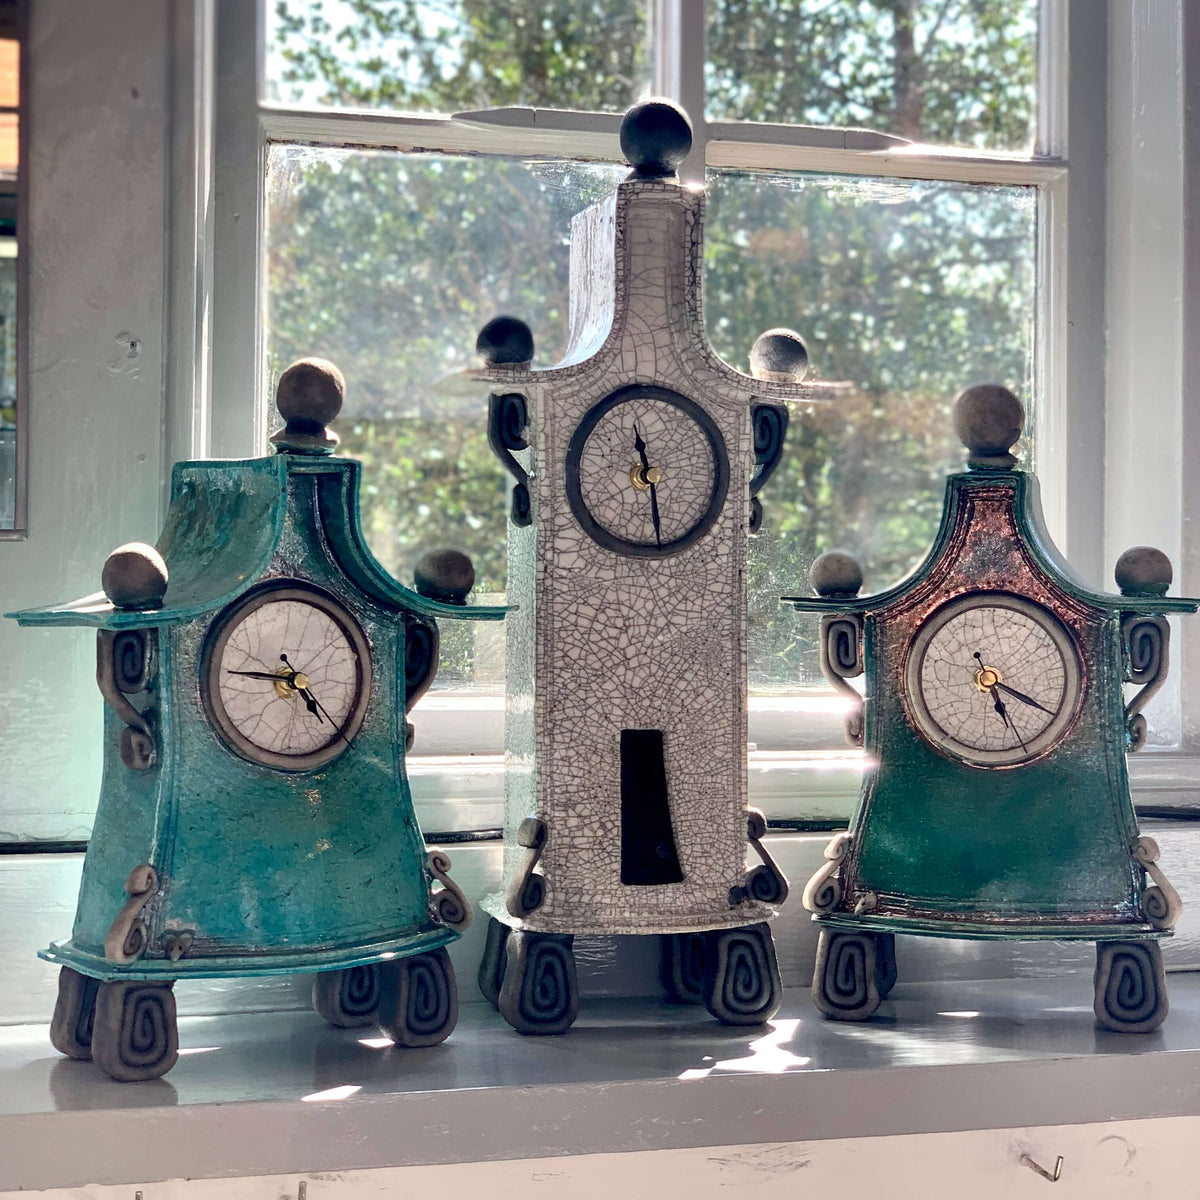 Three large ceramic raku fired clocks, in green and white.